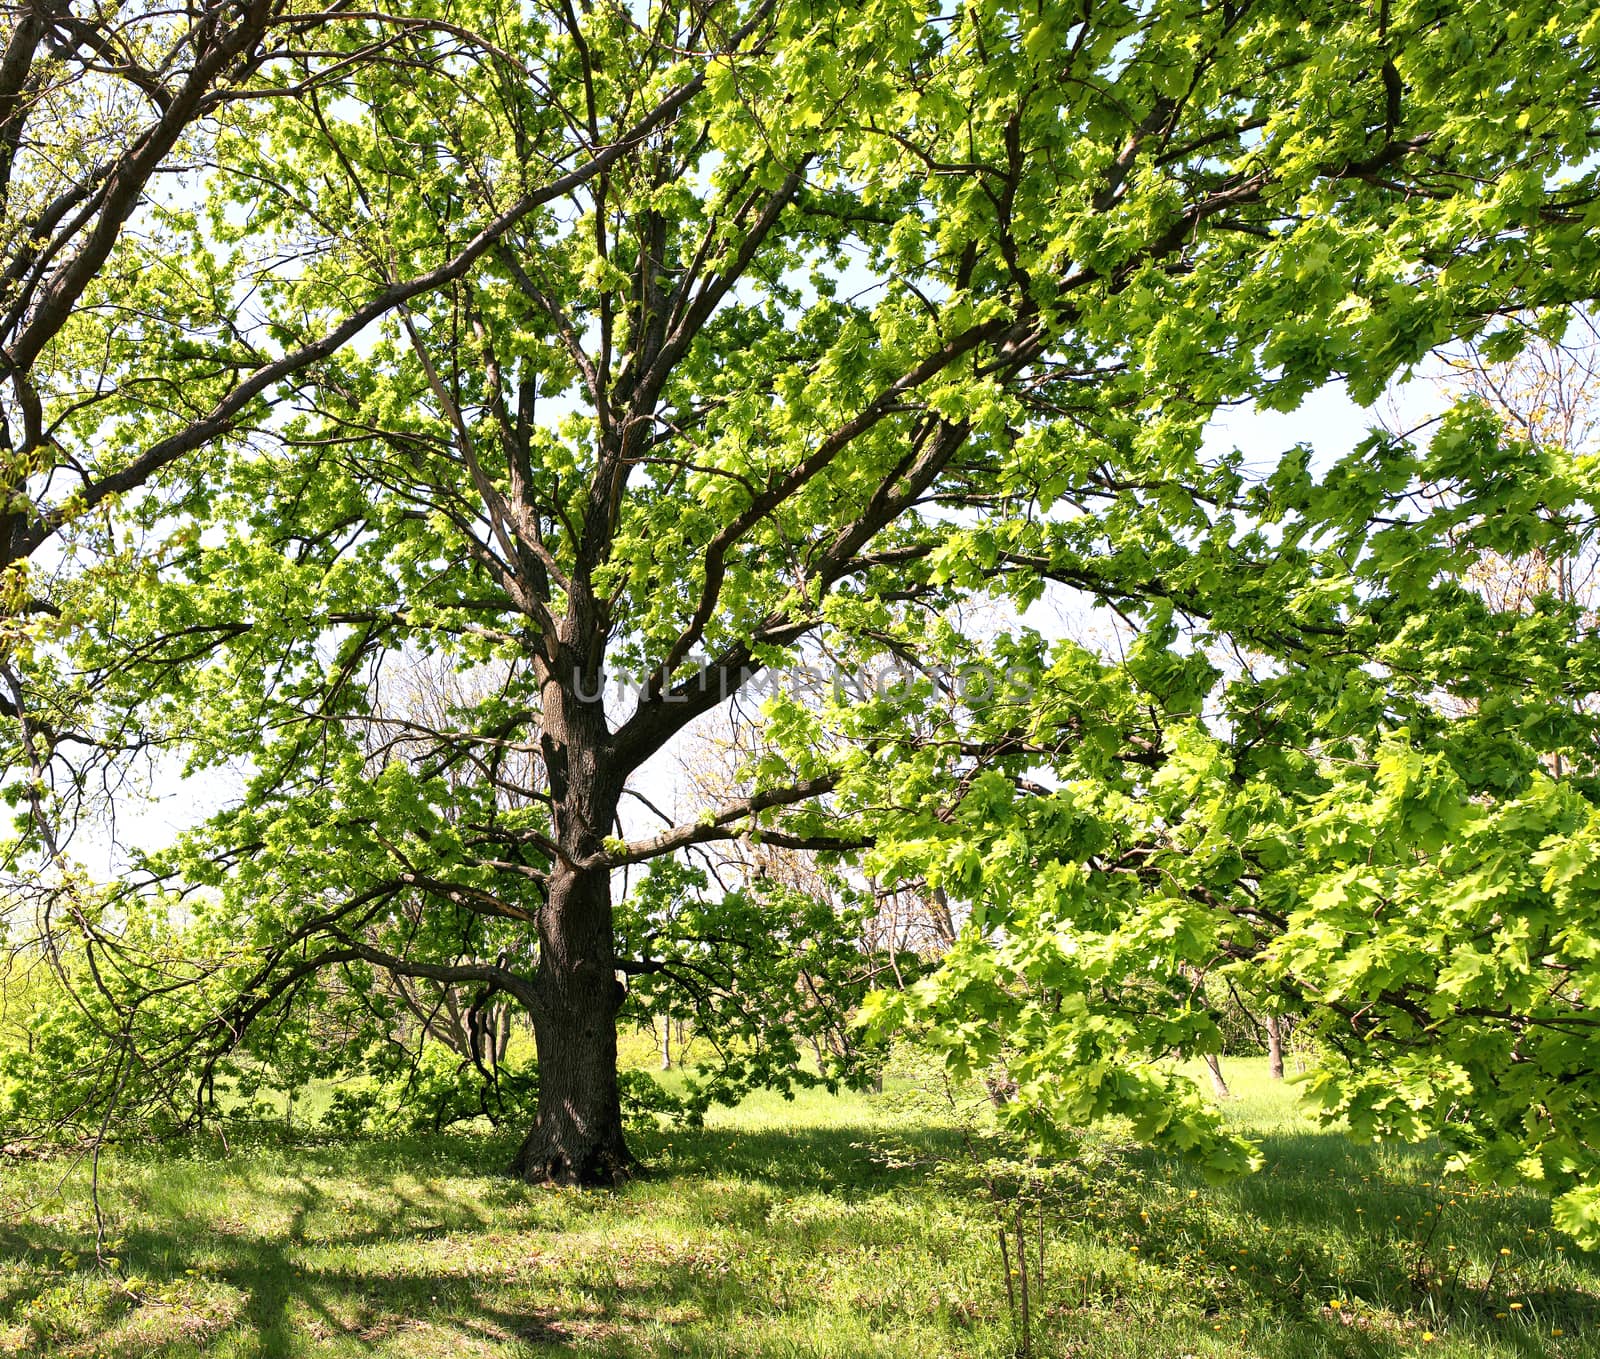 General view of the branching tree crown - oak in spring